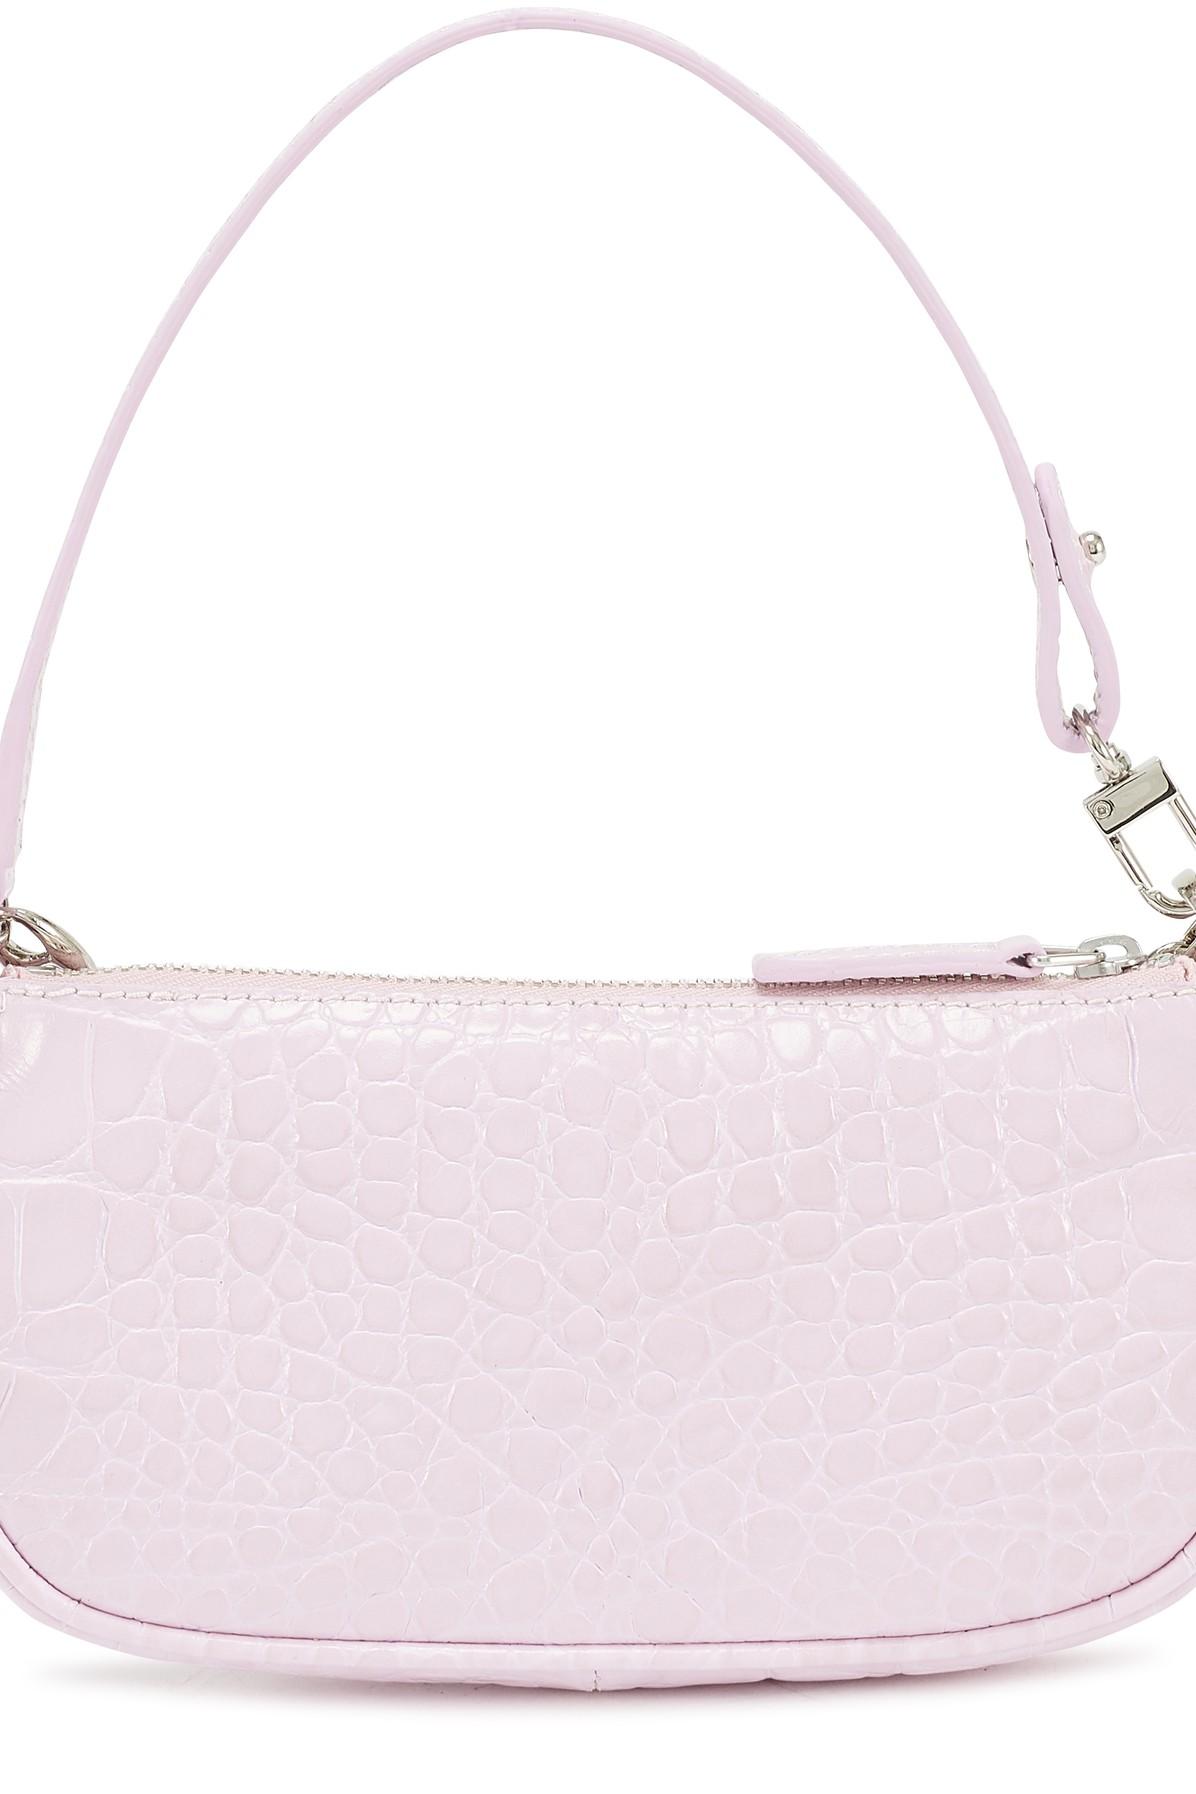 Rachel leather handbag By Far Pink in Leather - 32431716